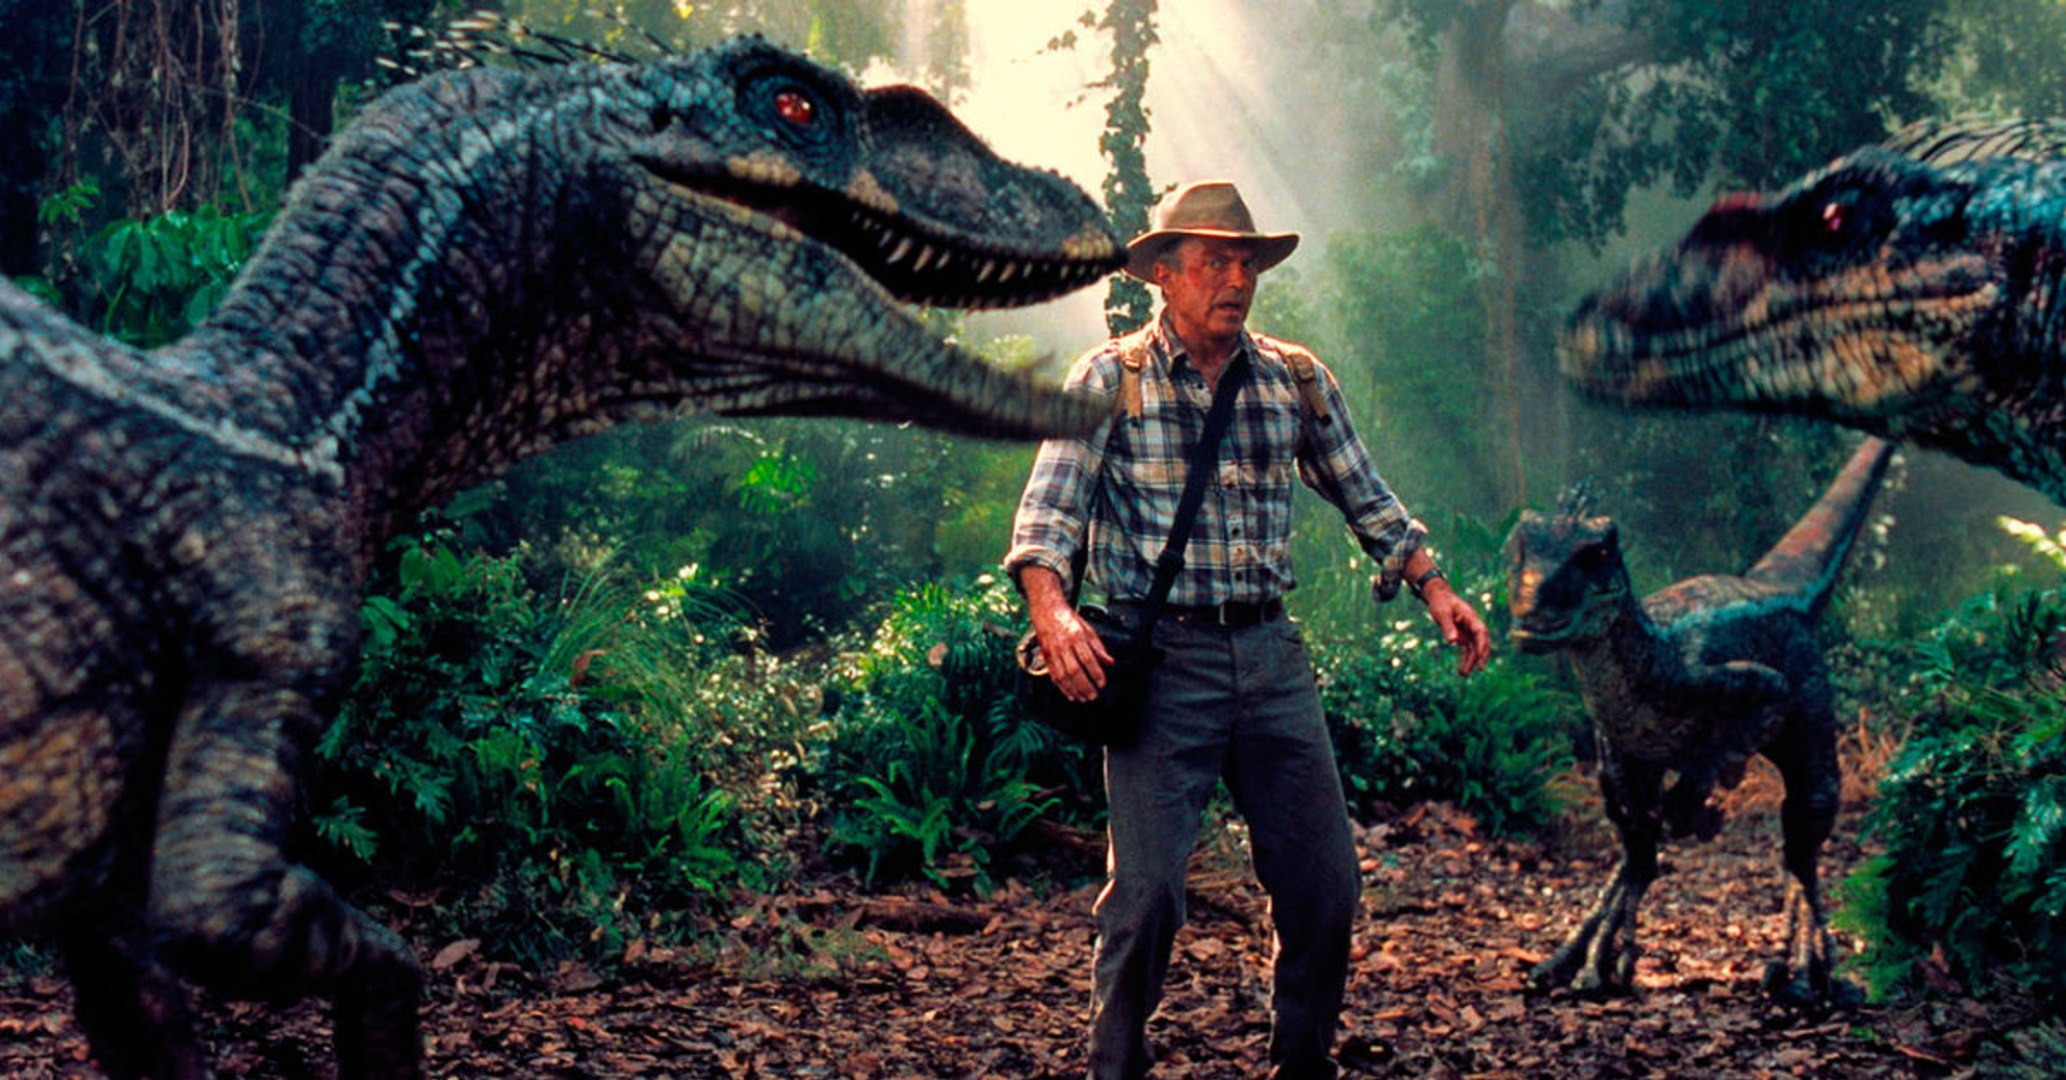 carmina george recommends Jurassic Park 3 Free Full Movie